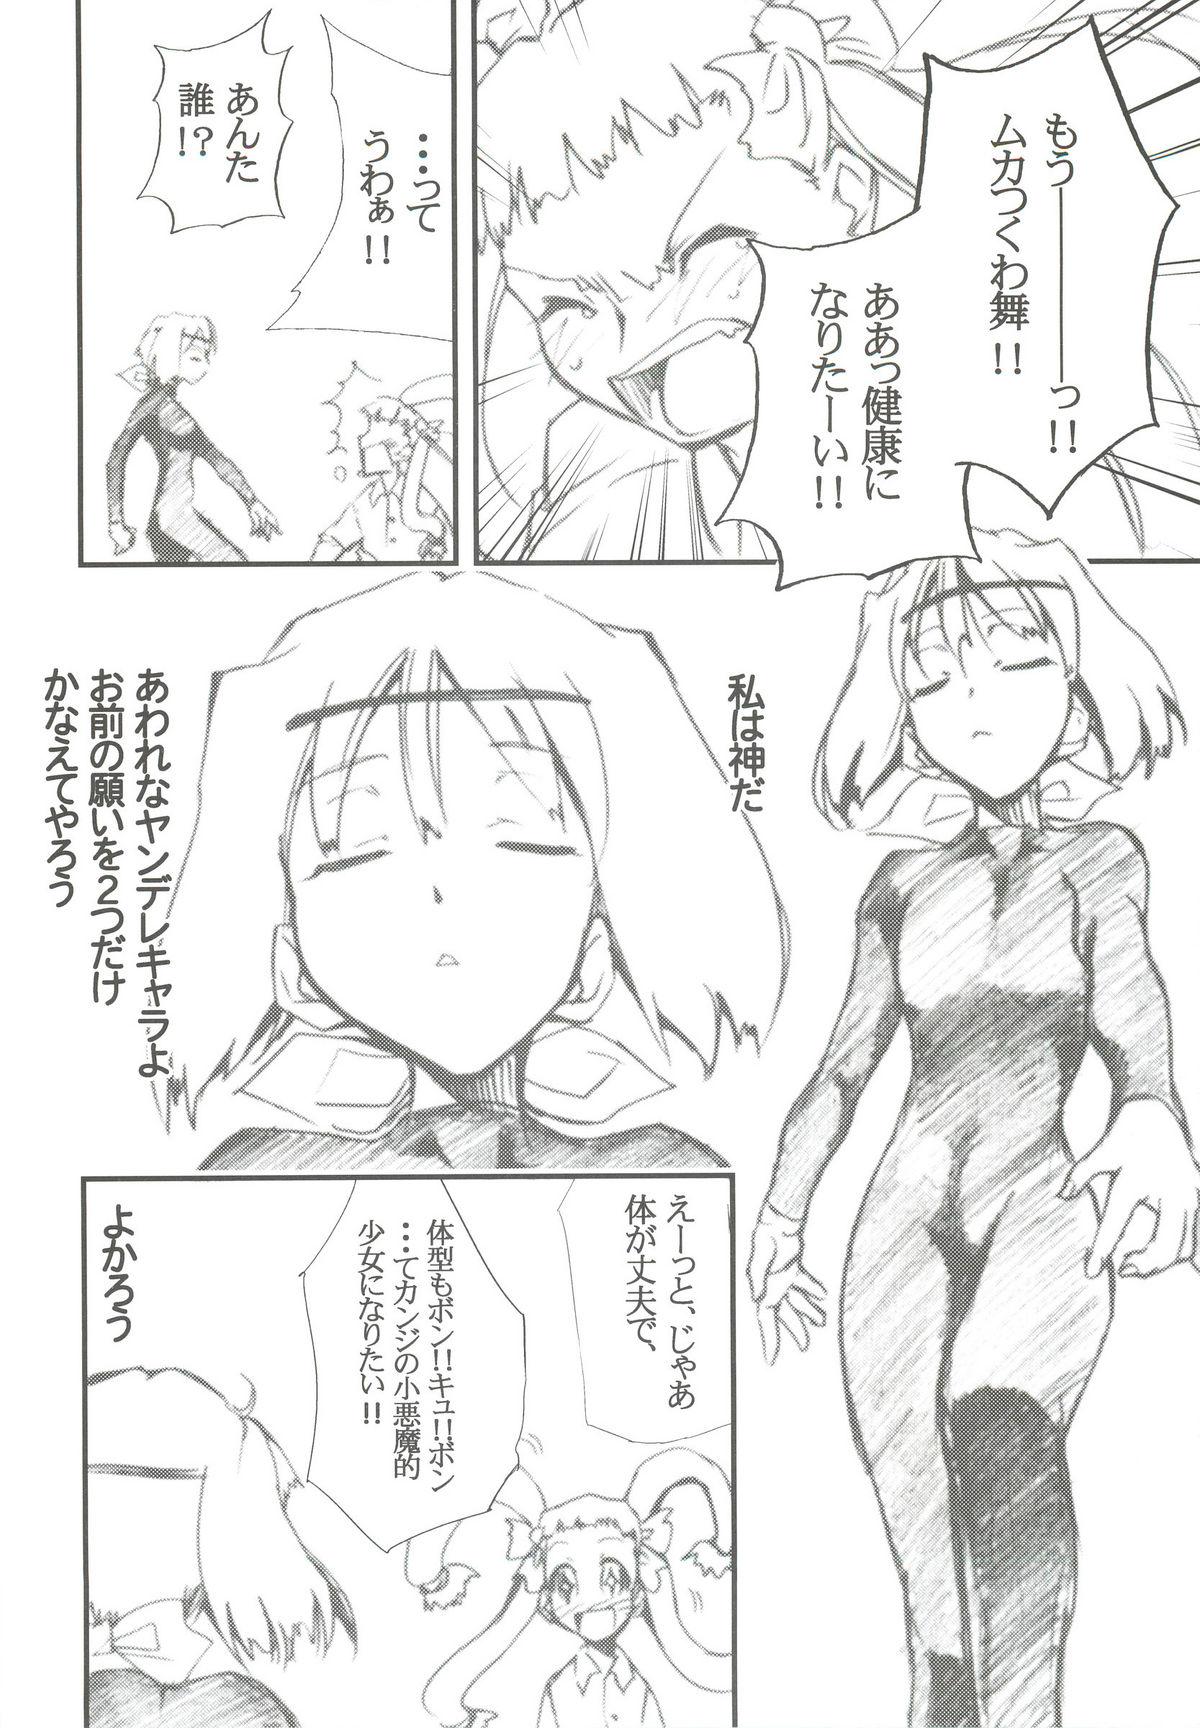 Three Some Watashitachi wa Kami da - Macross frontier Mai-hime Kiddy grade Nudist - Page 11